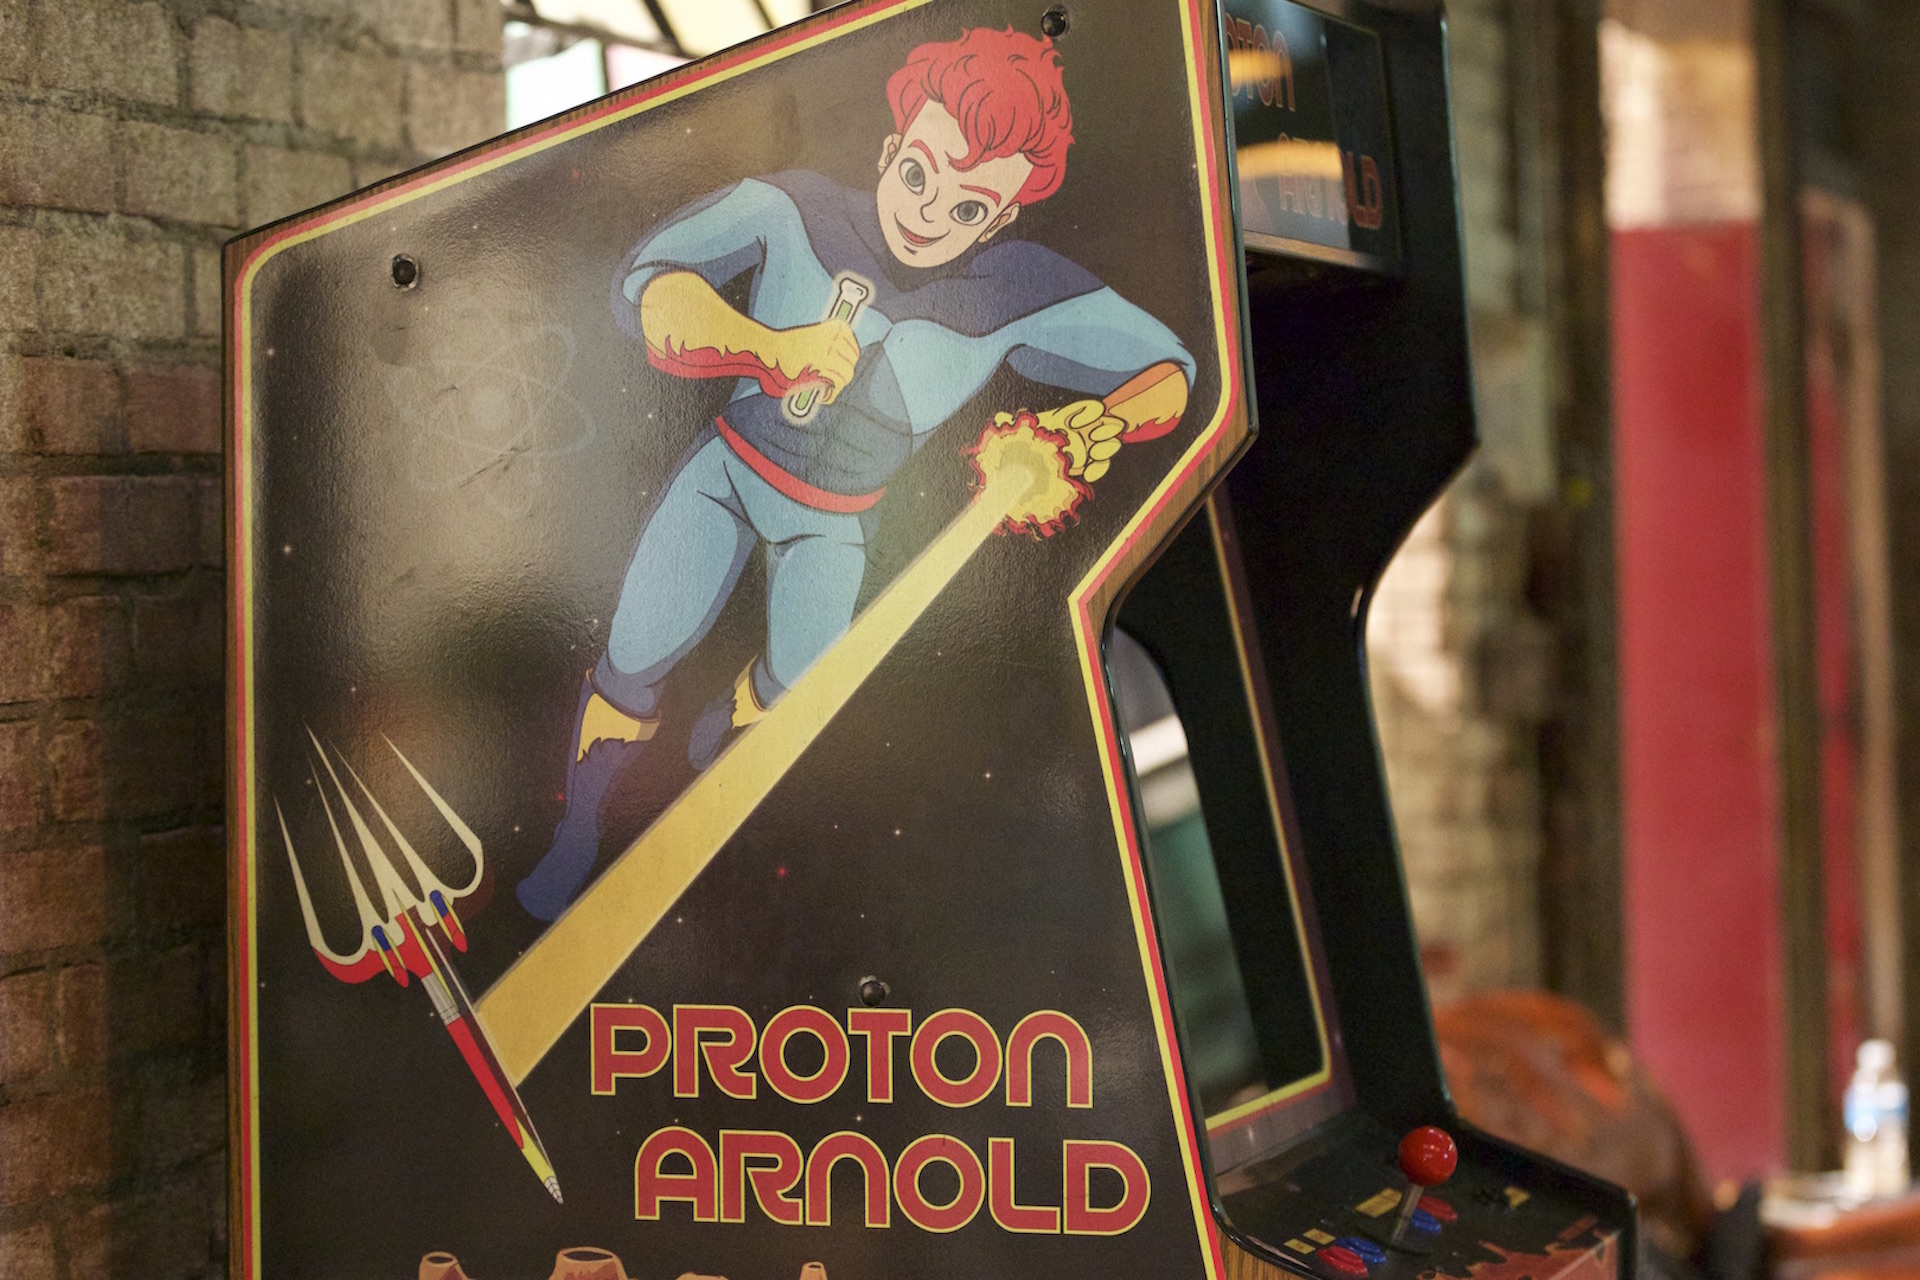 It's the Proton Arnold arcade game!